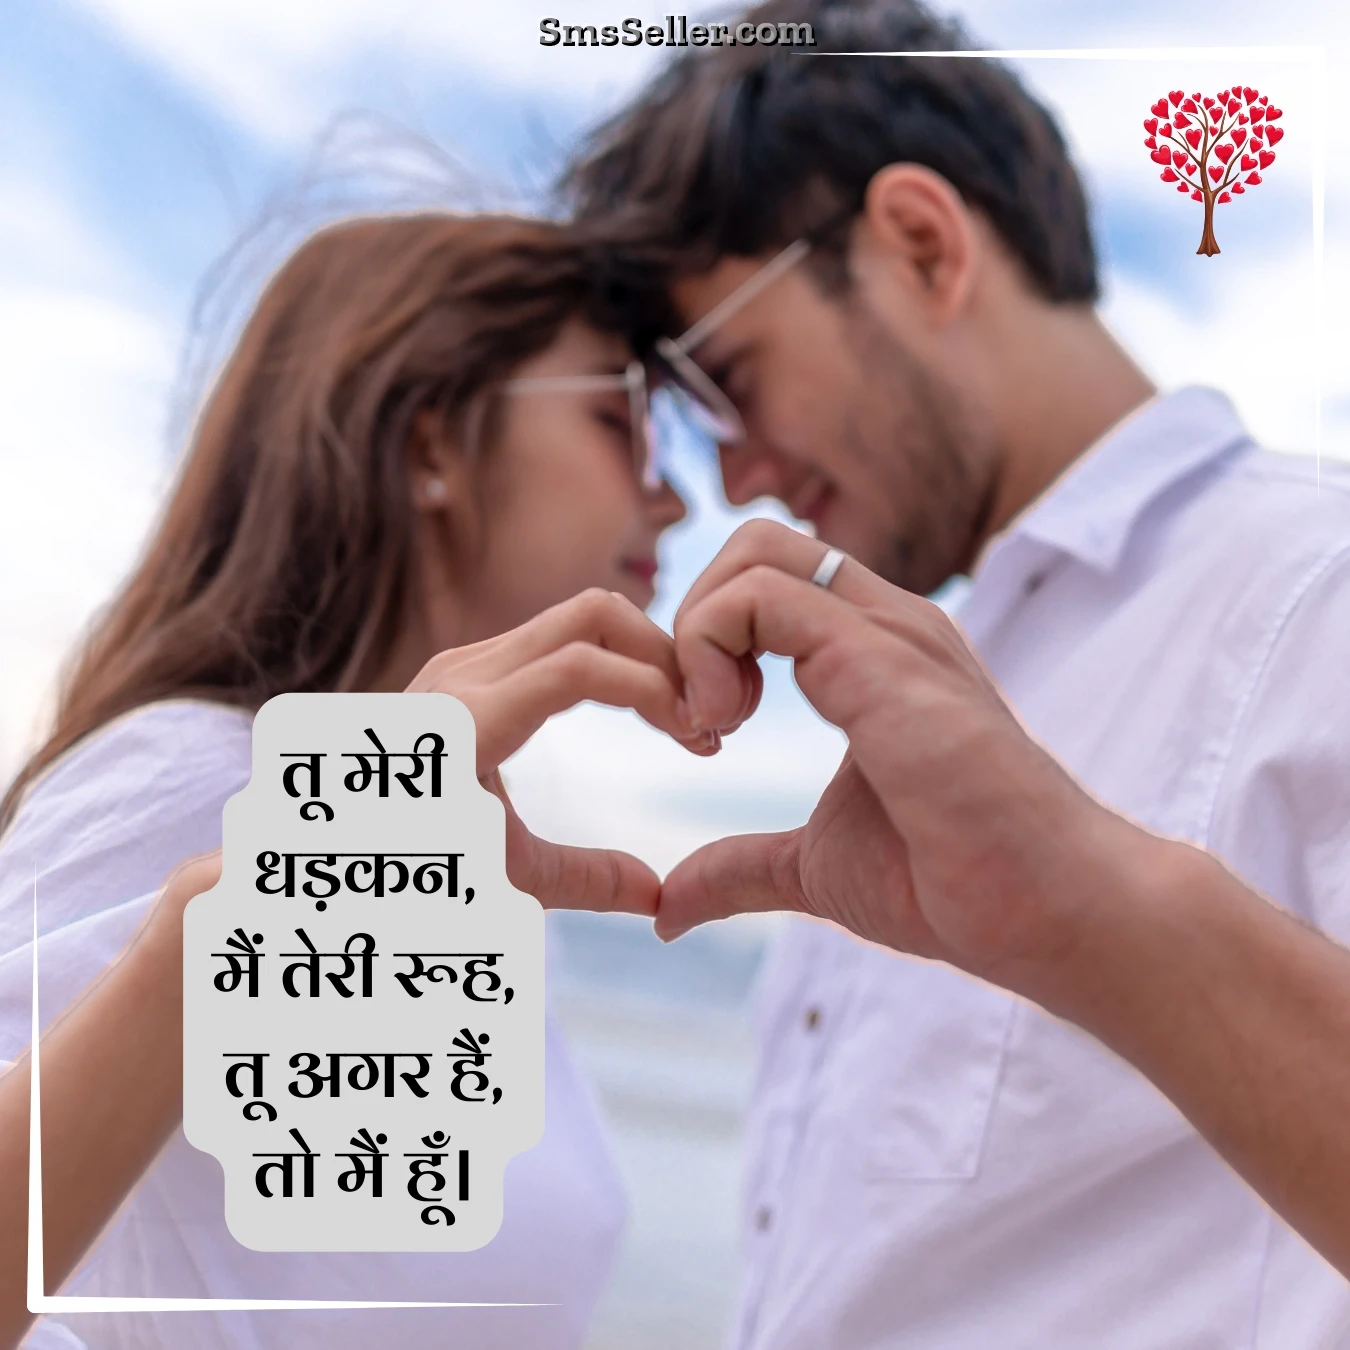 love in hindi too meree dhadakan main teree